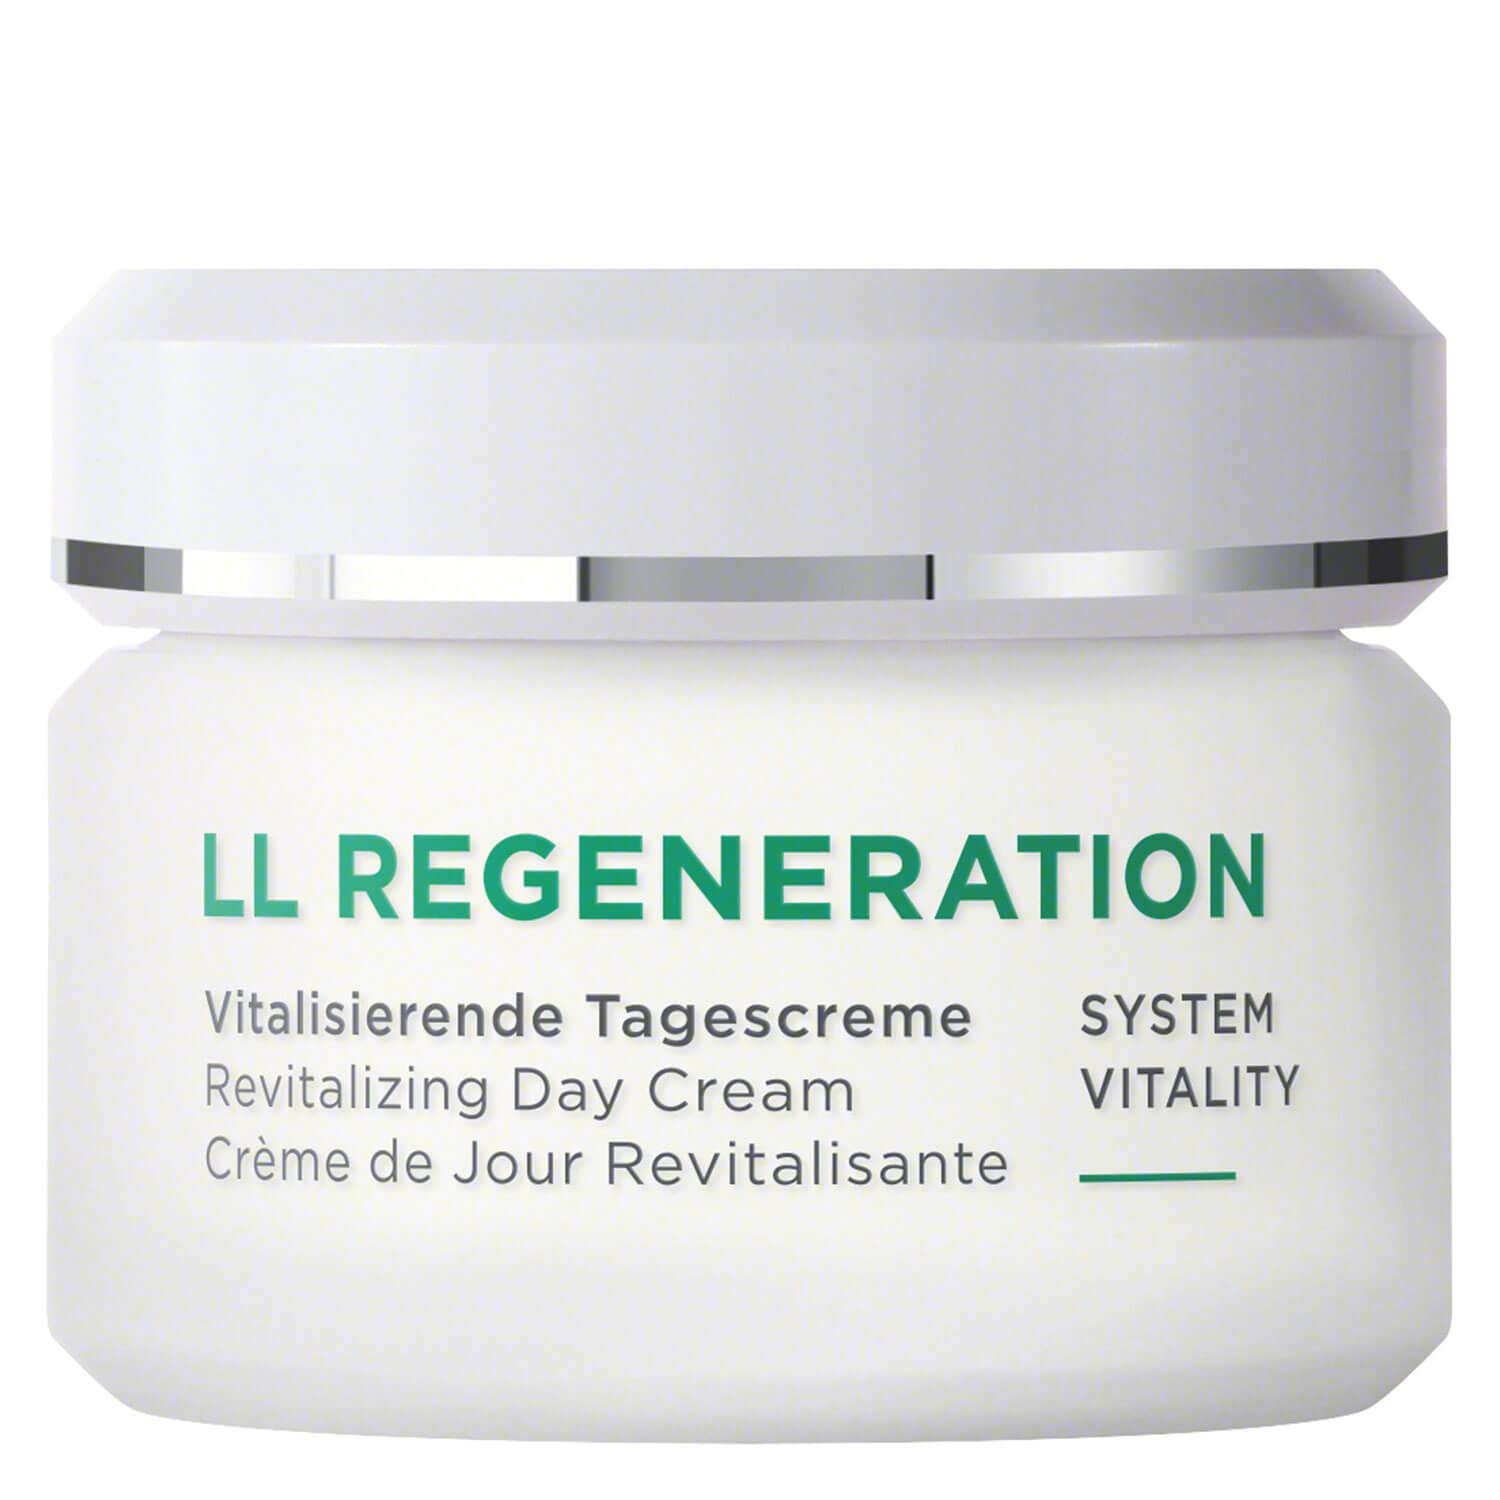 LL Regeneration - Revitalizing Day Cream